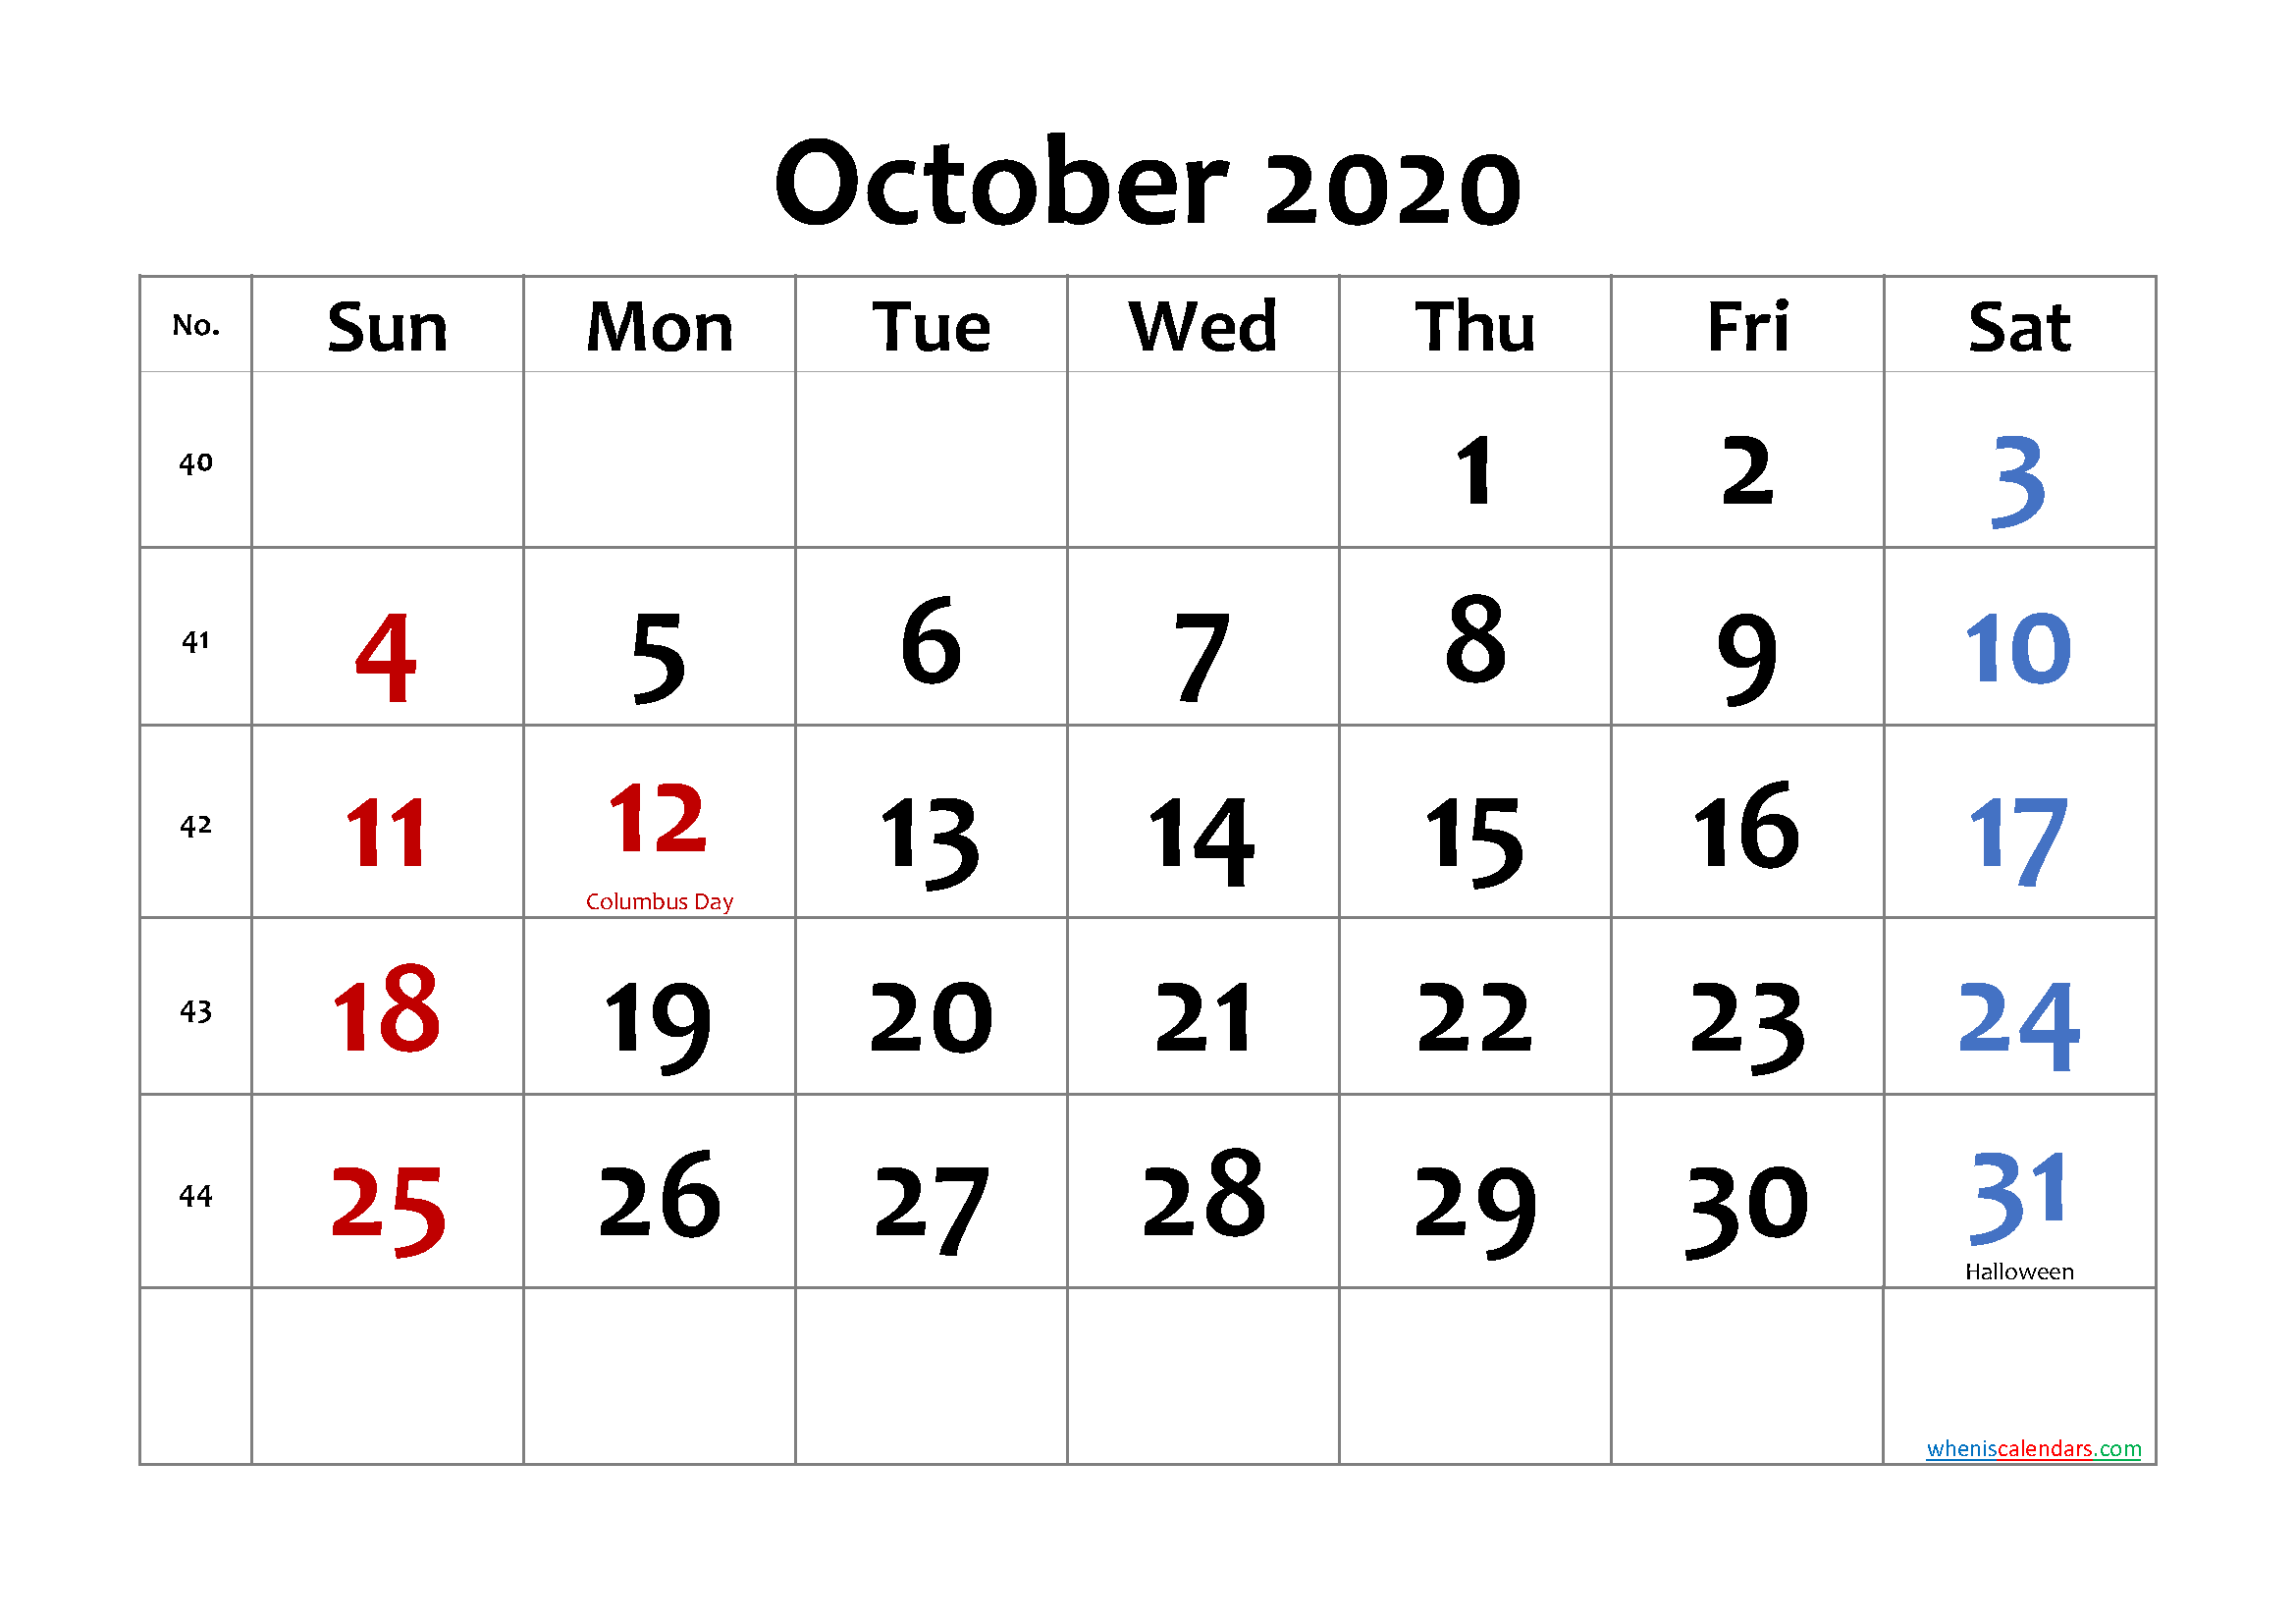 OCTOBER 2020 Printable Calendar with Holidays